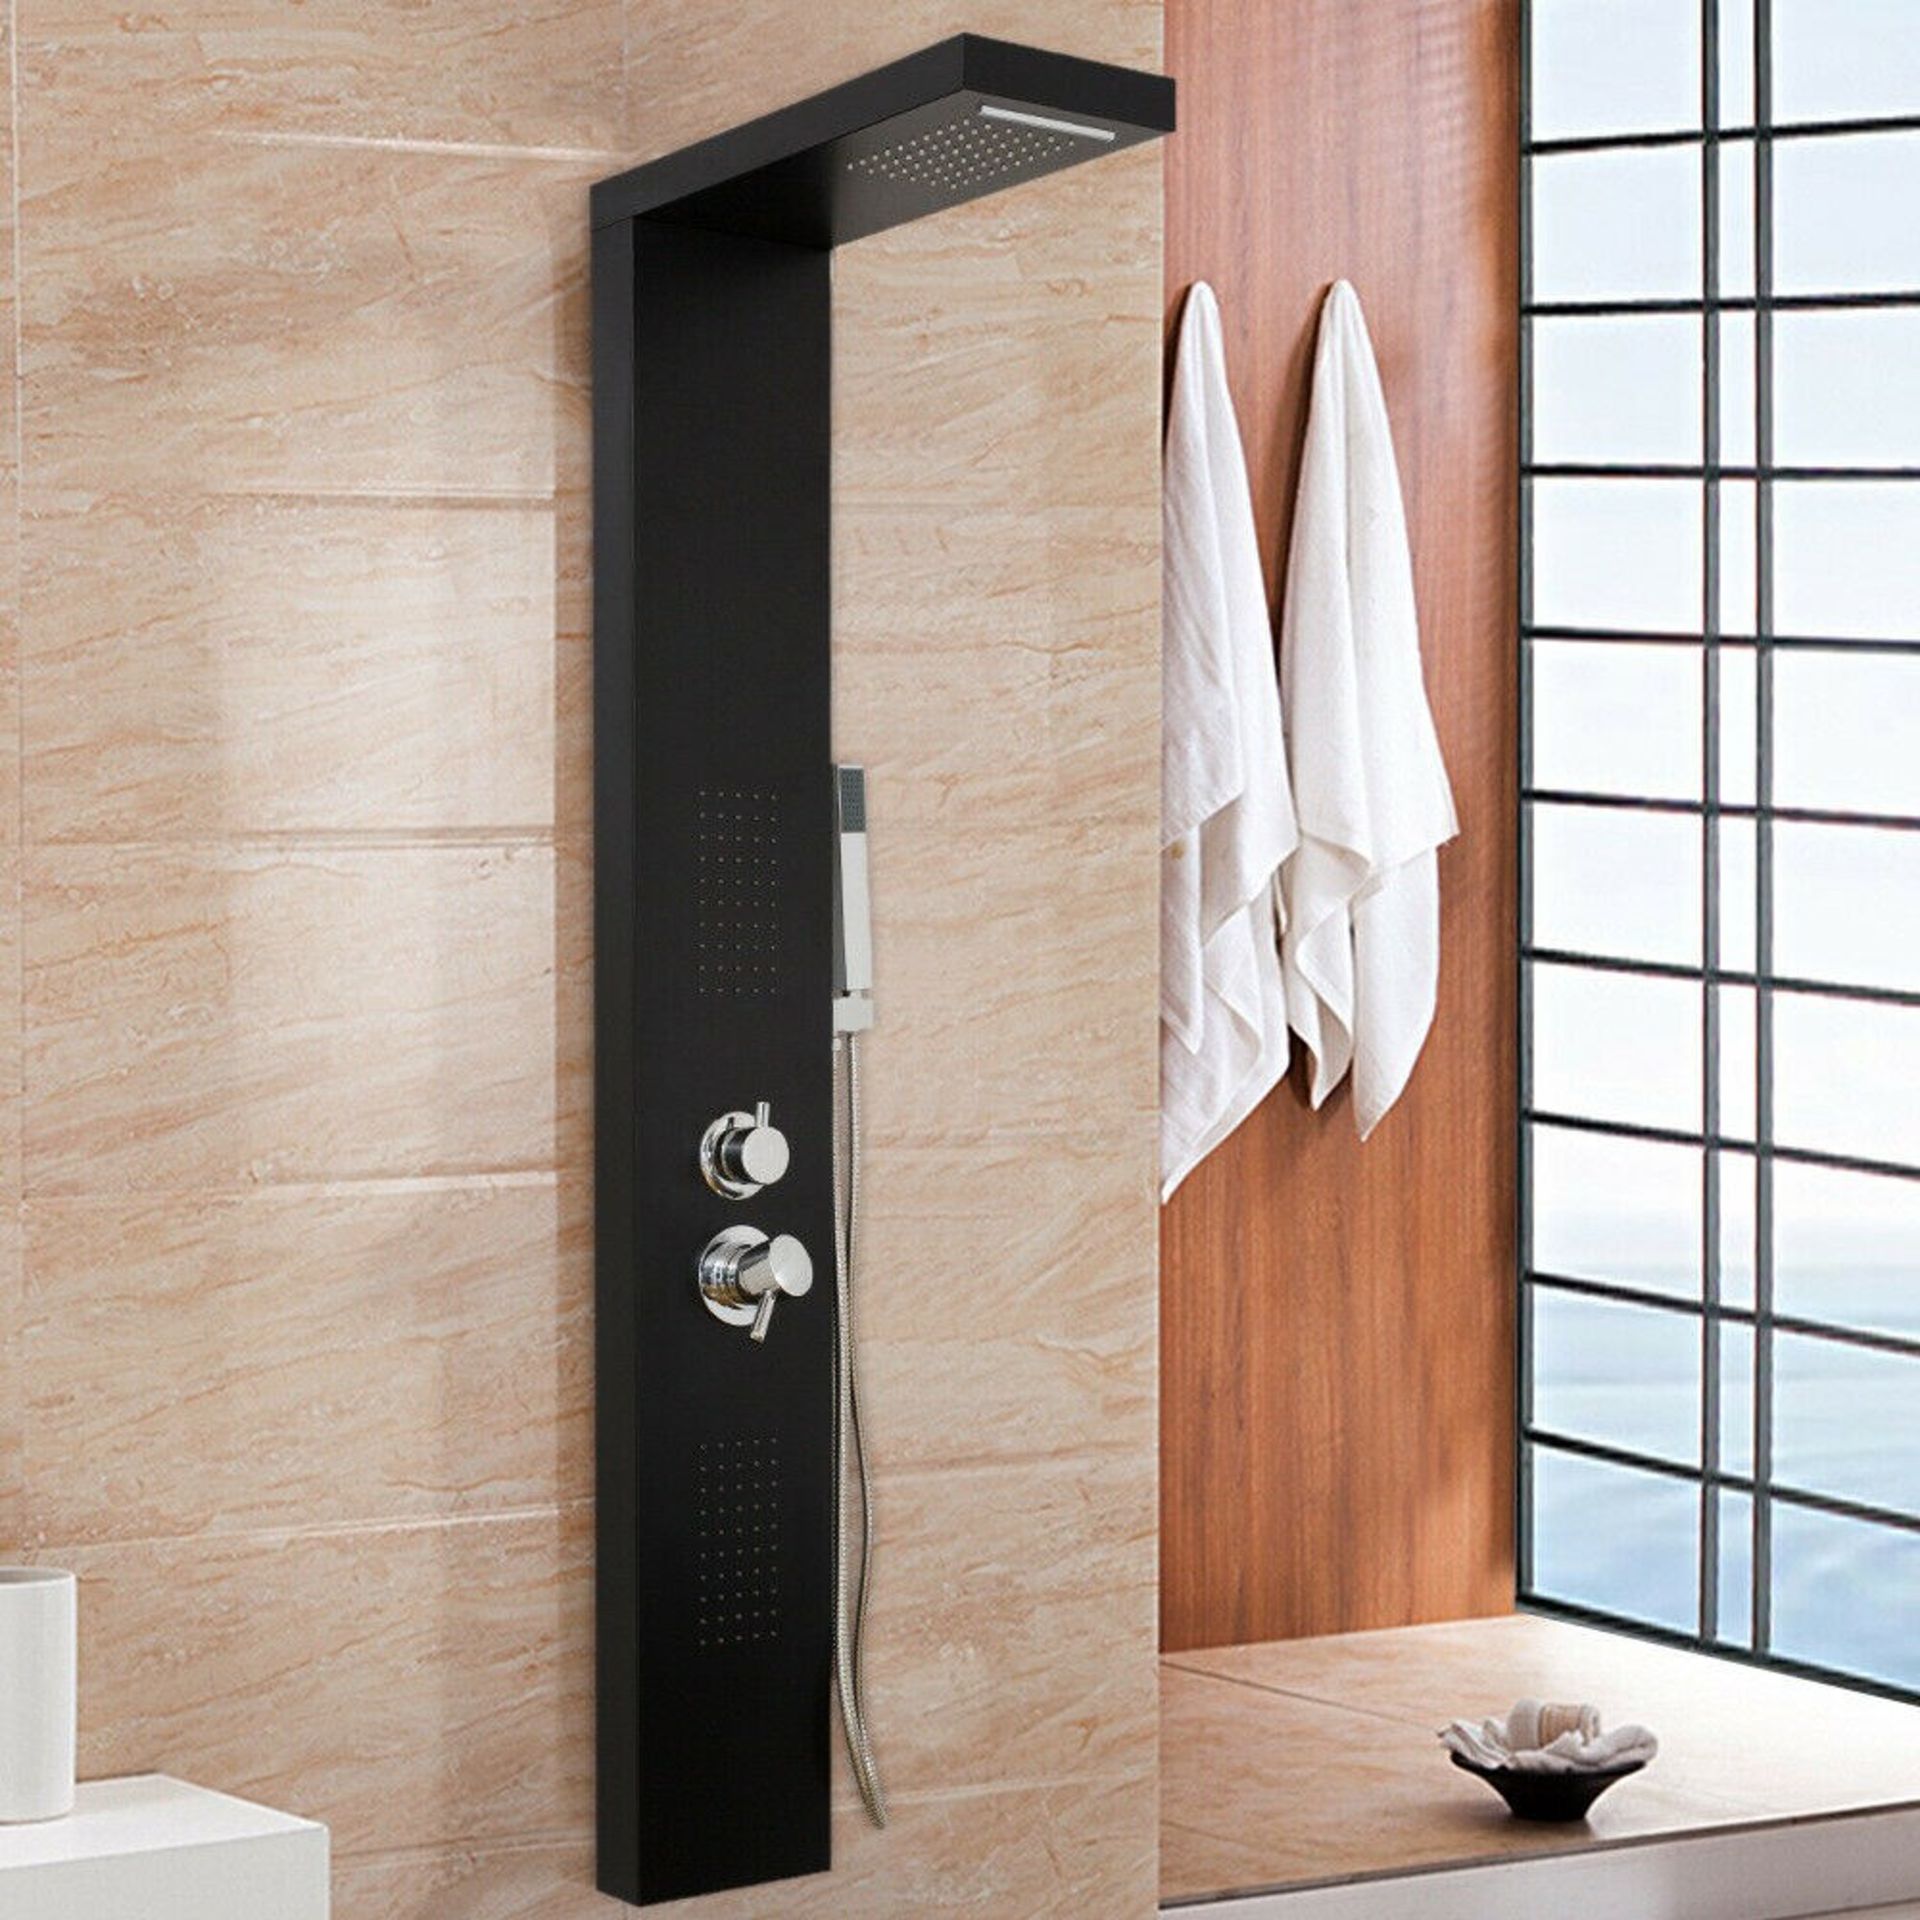 (DE5) Black Square Modern Bathroom Shower Column Tower Panel System With Hand Held & Massage Je... - Image 4 of 5